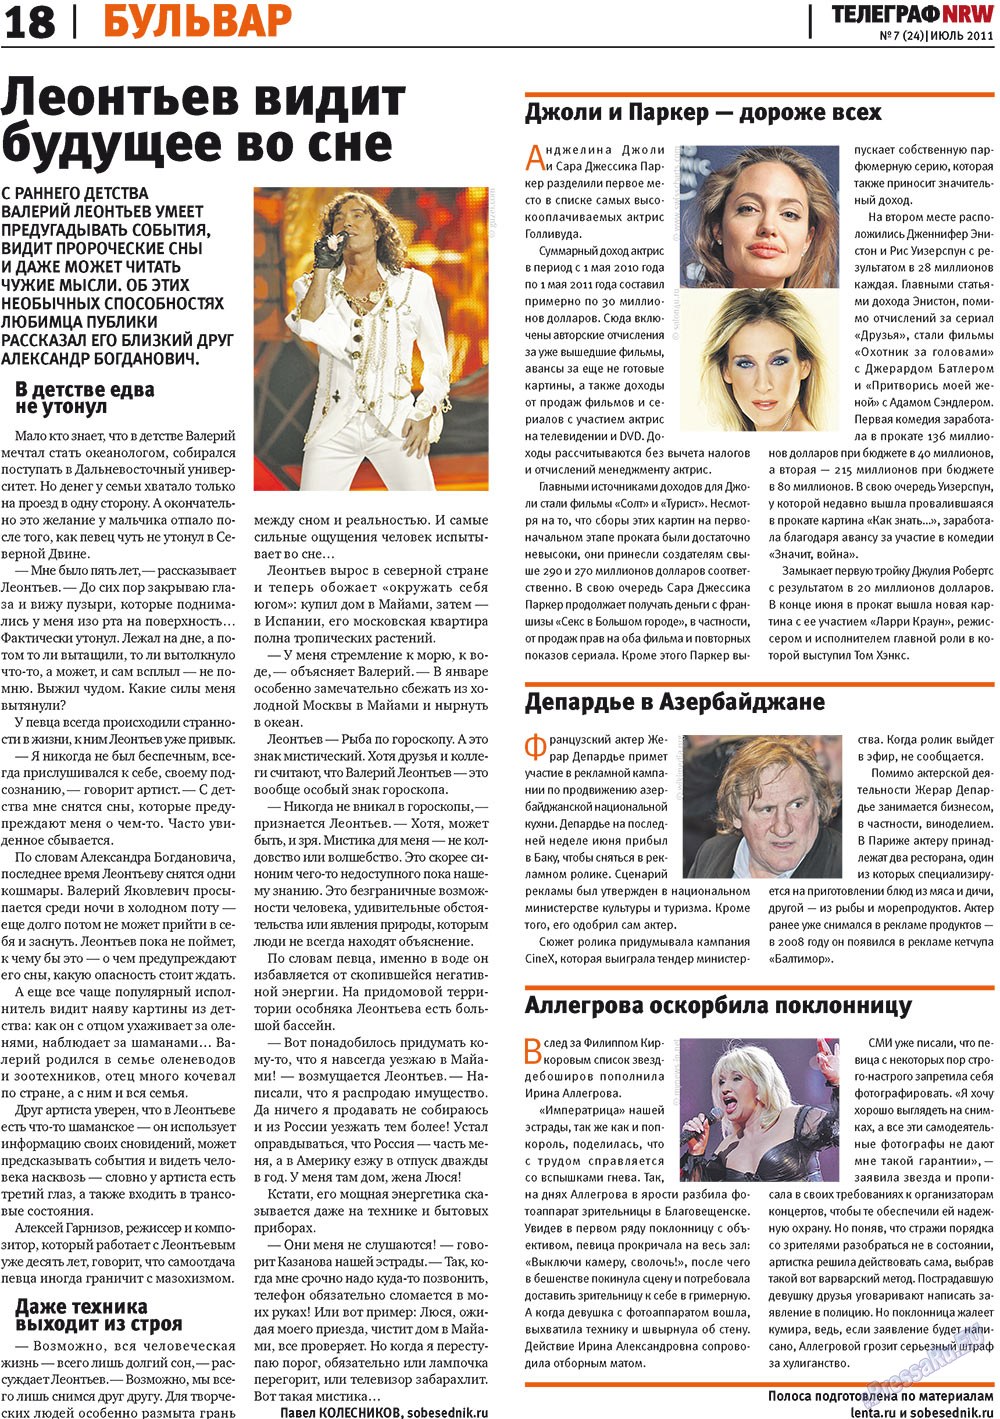 Телеграф NRW, газета. 2011 №7 стр.18